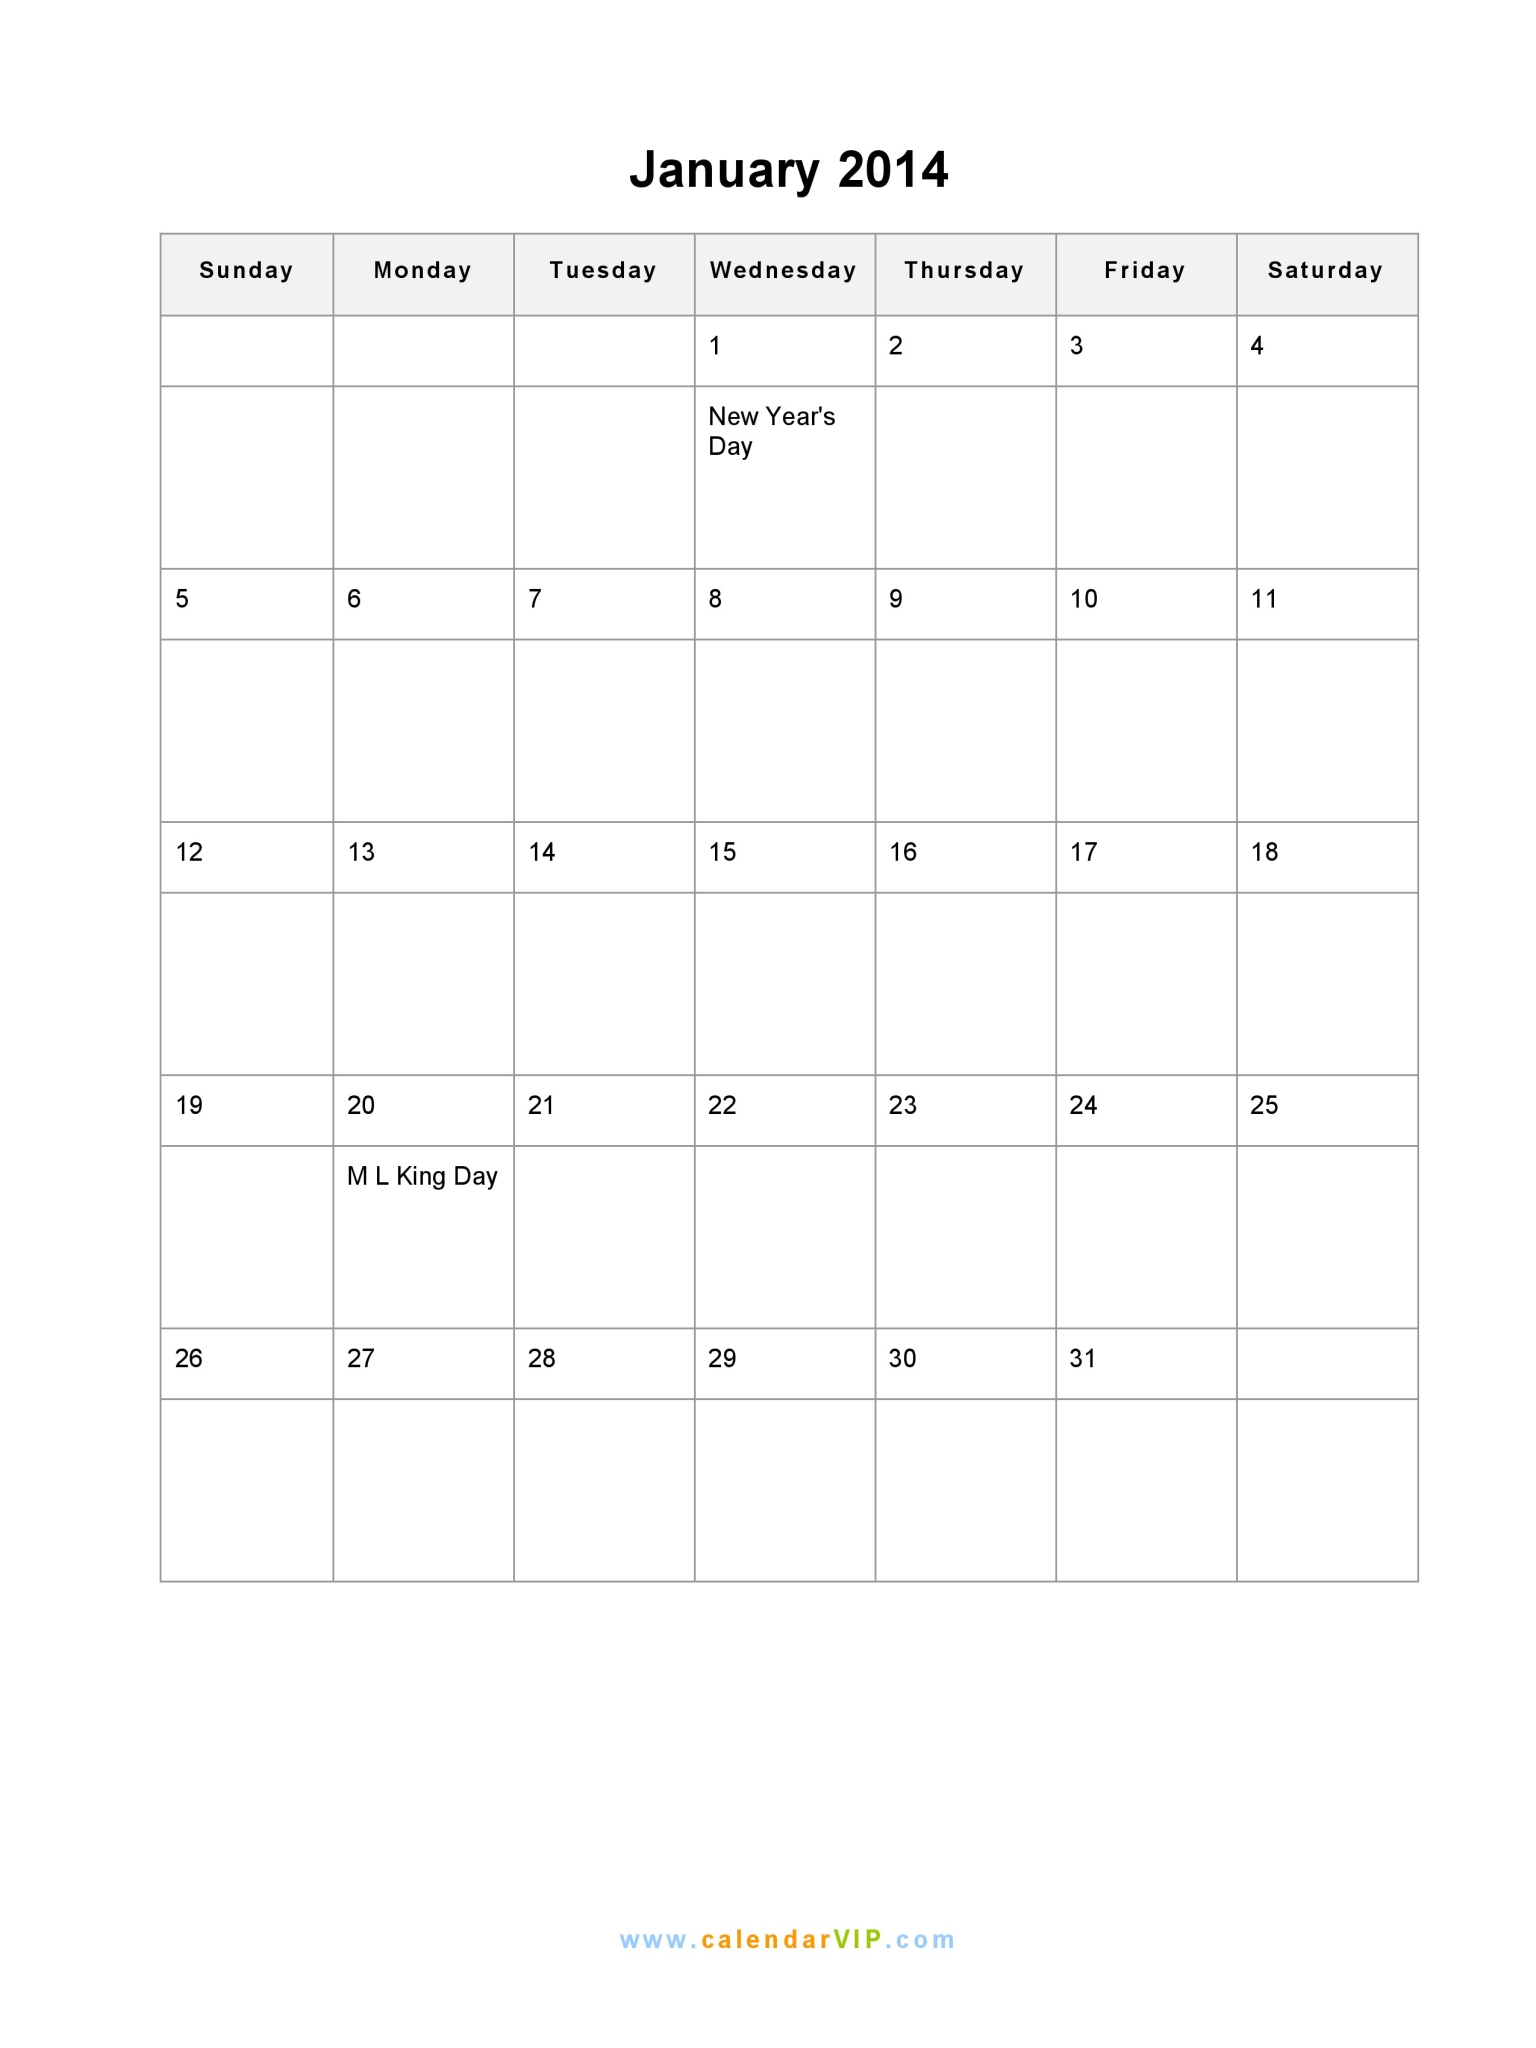 January 2014 Calendar - Blank Printable Calendar Template in PDF Word Excel